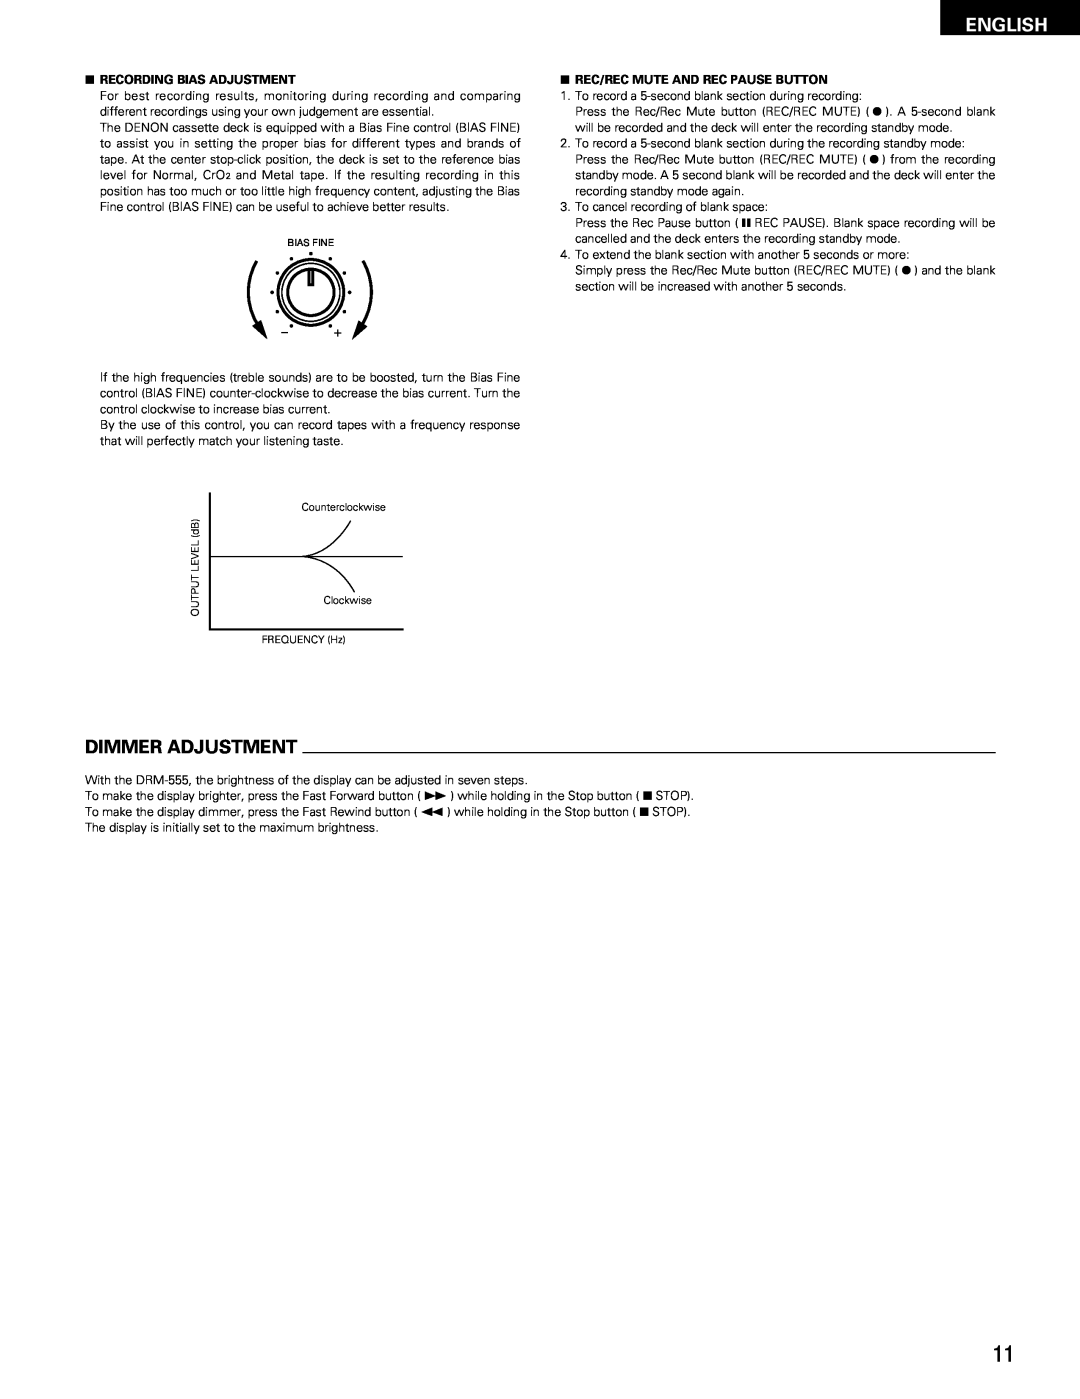 Denon DRM-555 manual Dimmer Adjustment, English, 2RECORDING BIAS ADJUSTMENT, 2REC/REC MUTE AND REC PAUSE BUTTON 